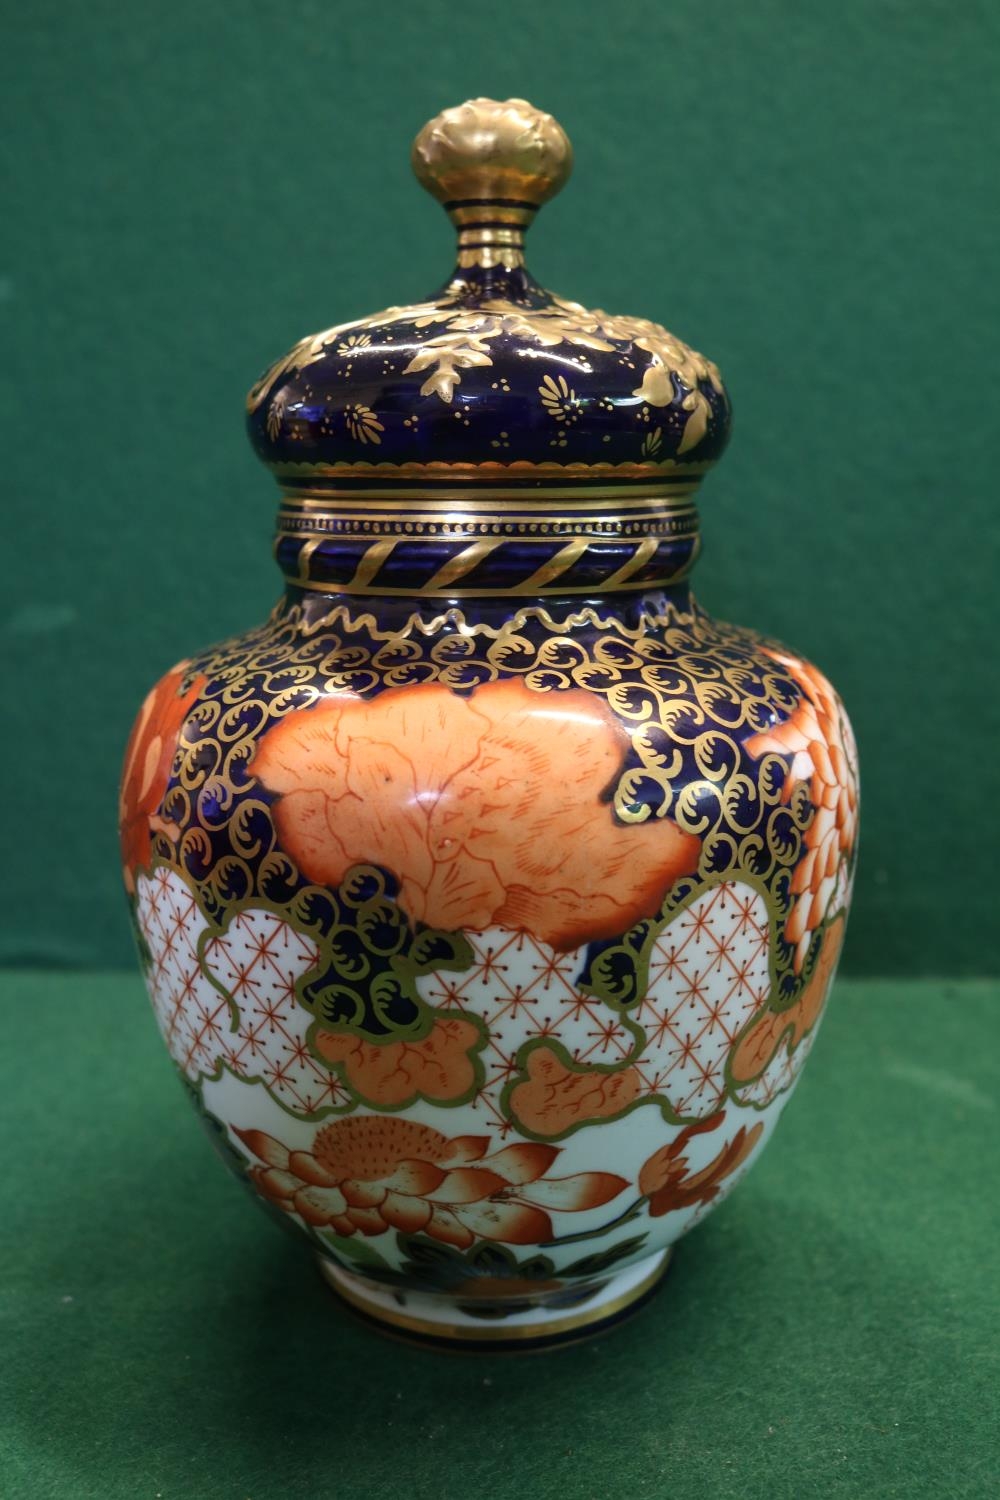 Royal Crown Derby late 19th century Cobalt Blue and Gilt large Imari pattern lidded urn style vase - Image 2 of 4